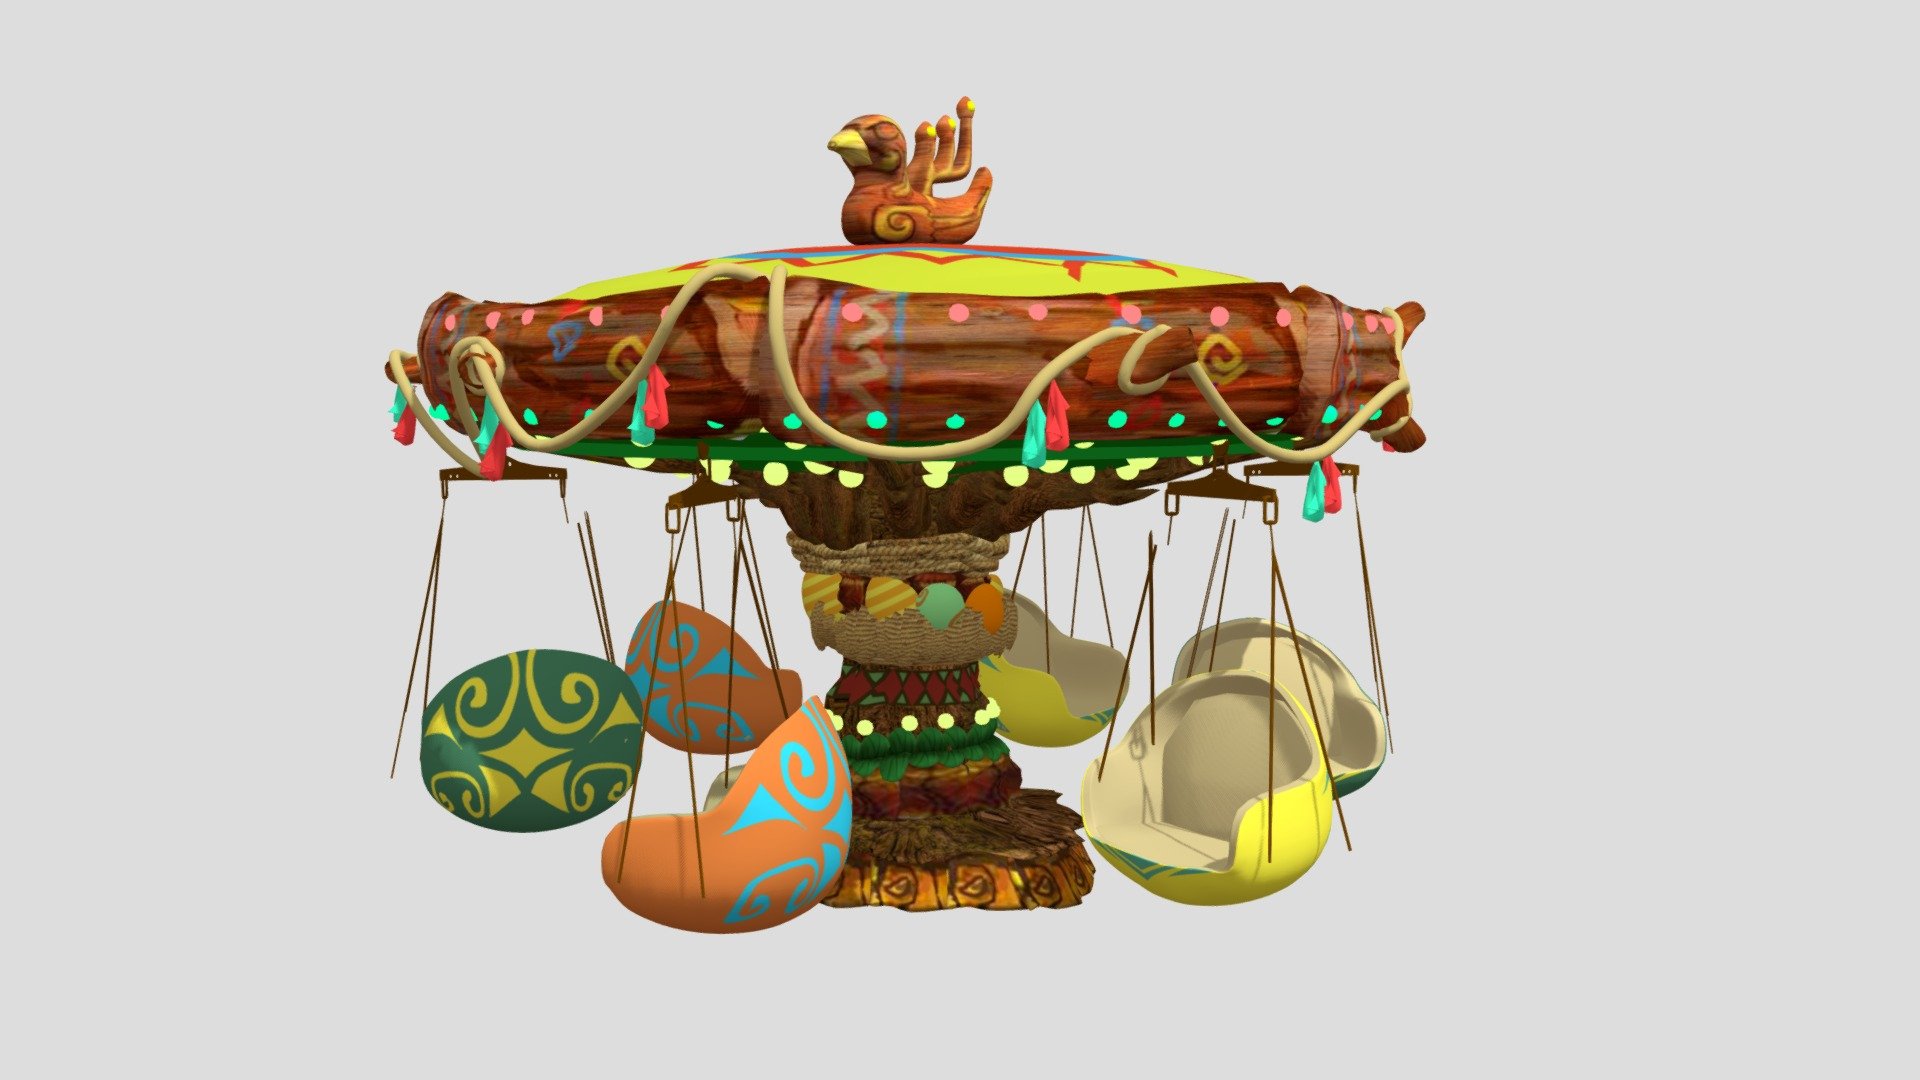 Amusement Park Equipment model.
The 3D model of Amusement Park Equipment.
Hope you like it 3d model